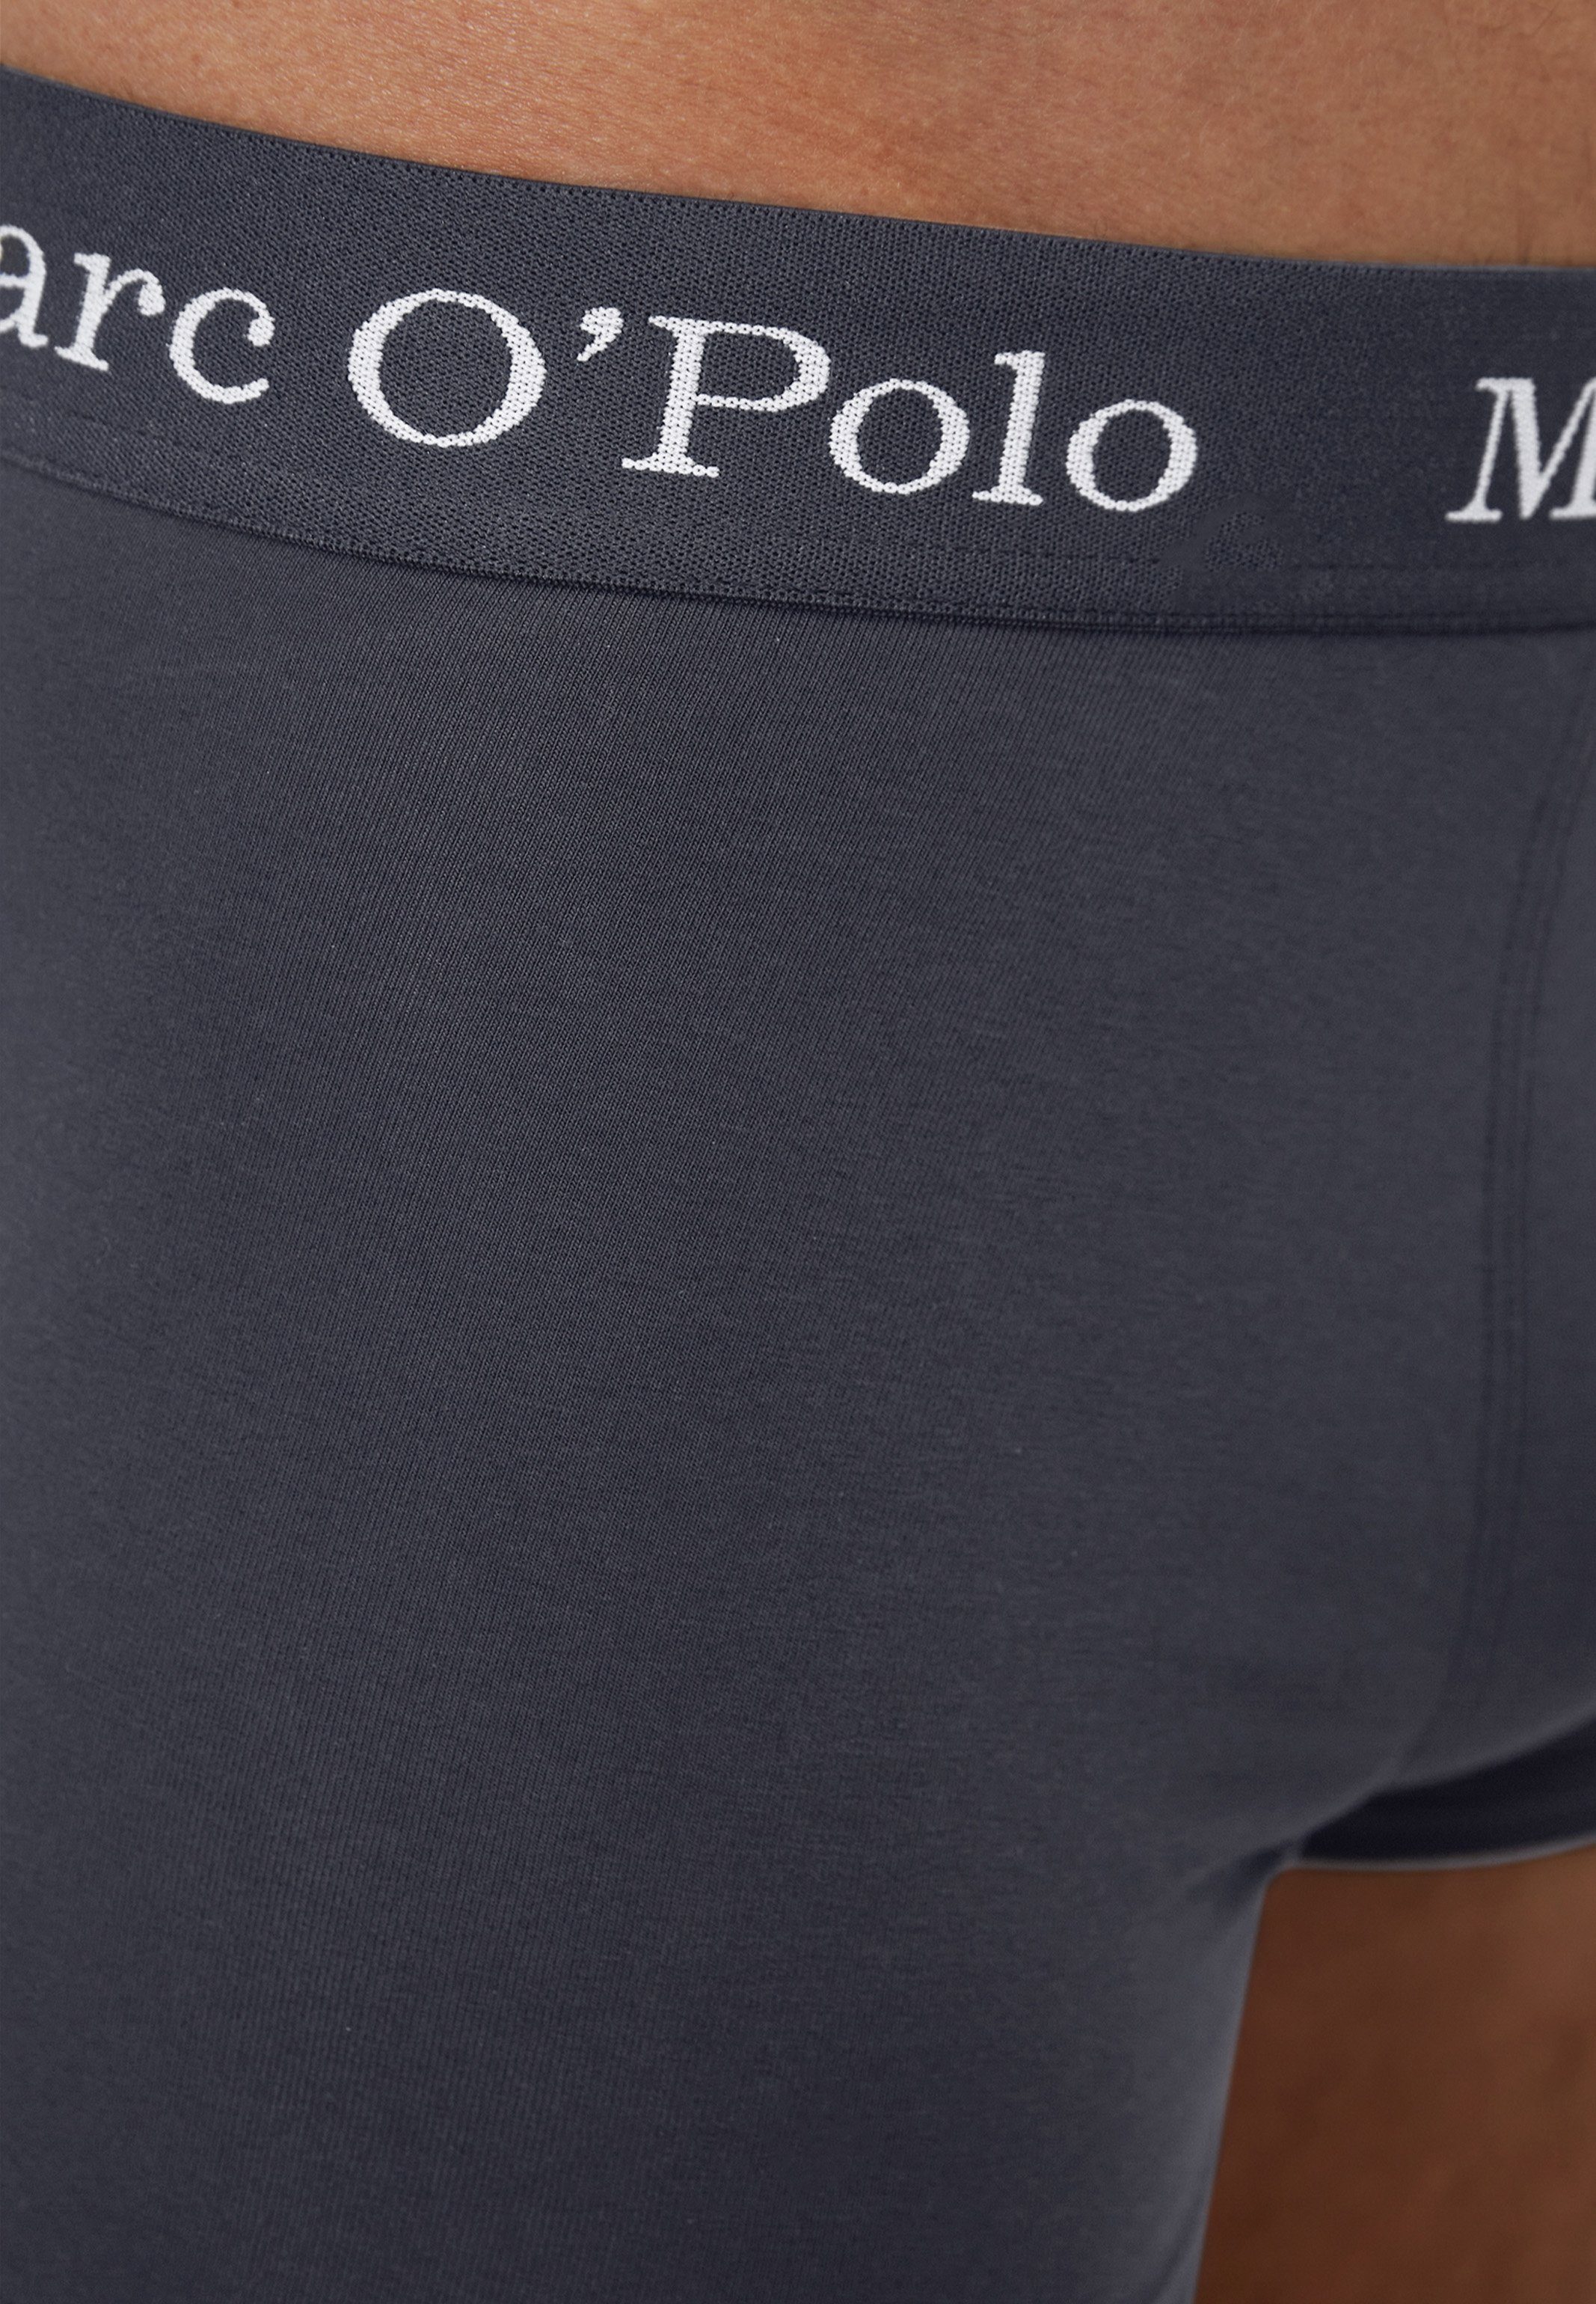 10er (Spar-Set, 10-St) Short Baumwolle / Retro - - O'Polo Navy/Grey Retro Marc Elements Melange Boxer Eingriff Ohne Cotton Pack Organic - Pant